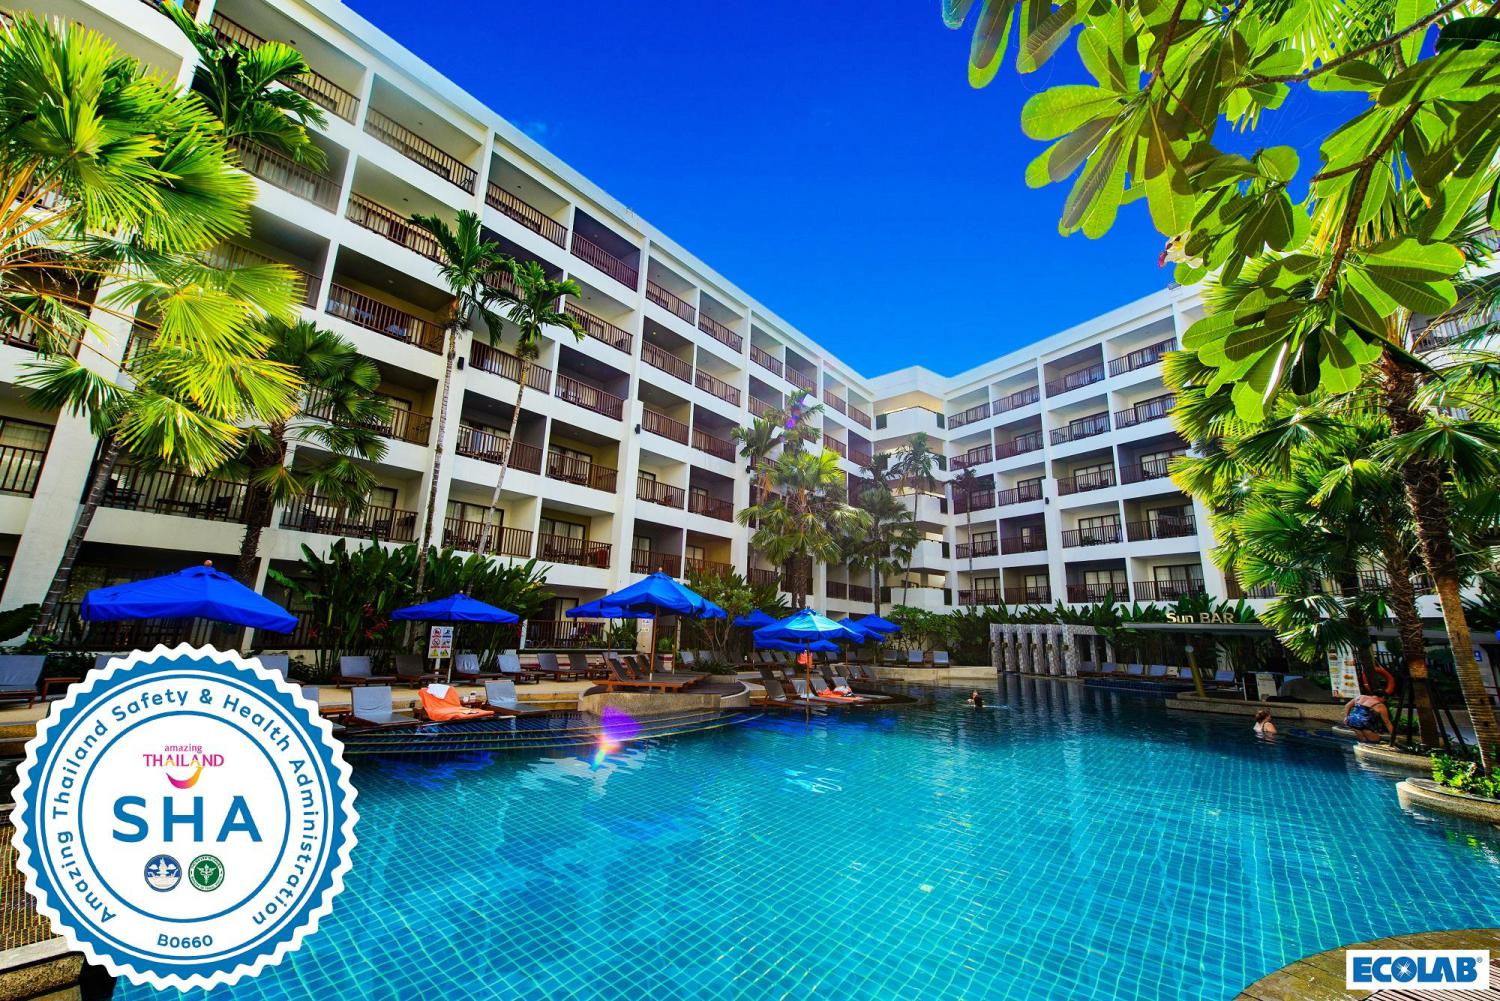 Deevana Plaza Hotel Phuket Patong - Image 0